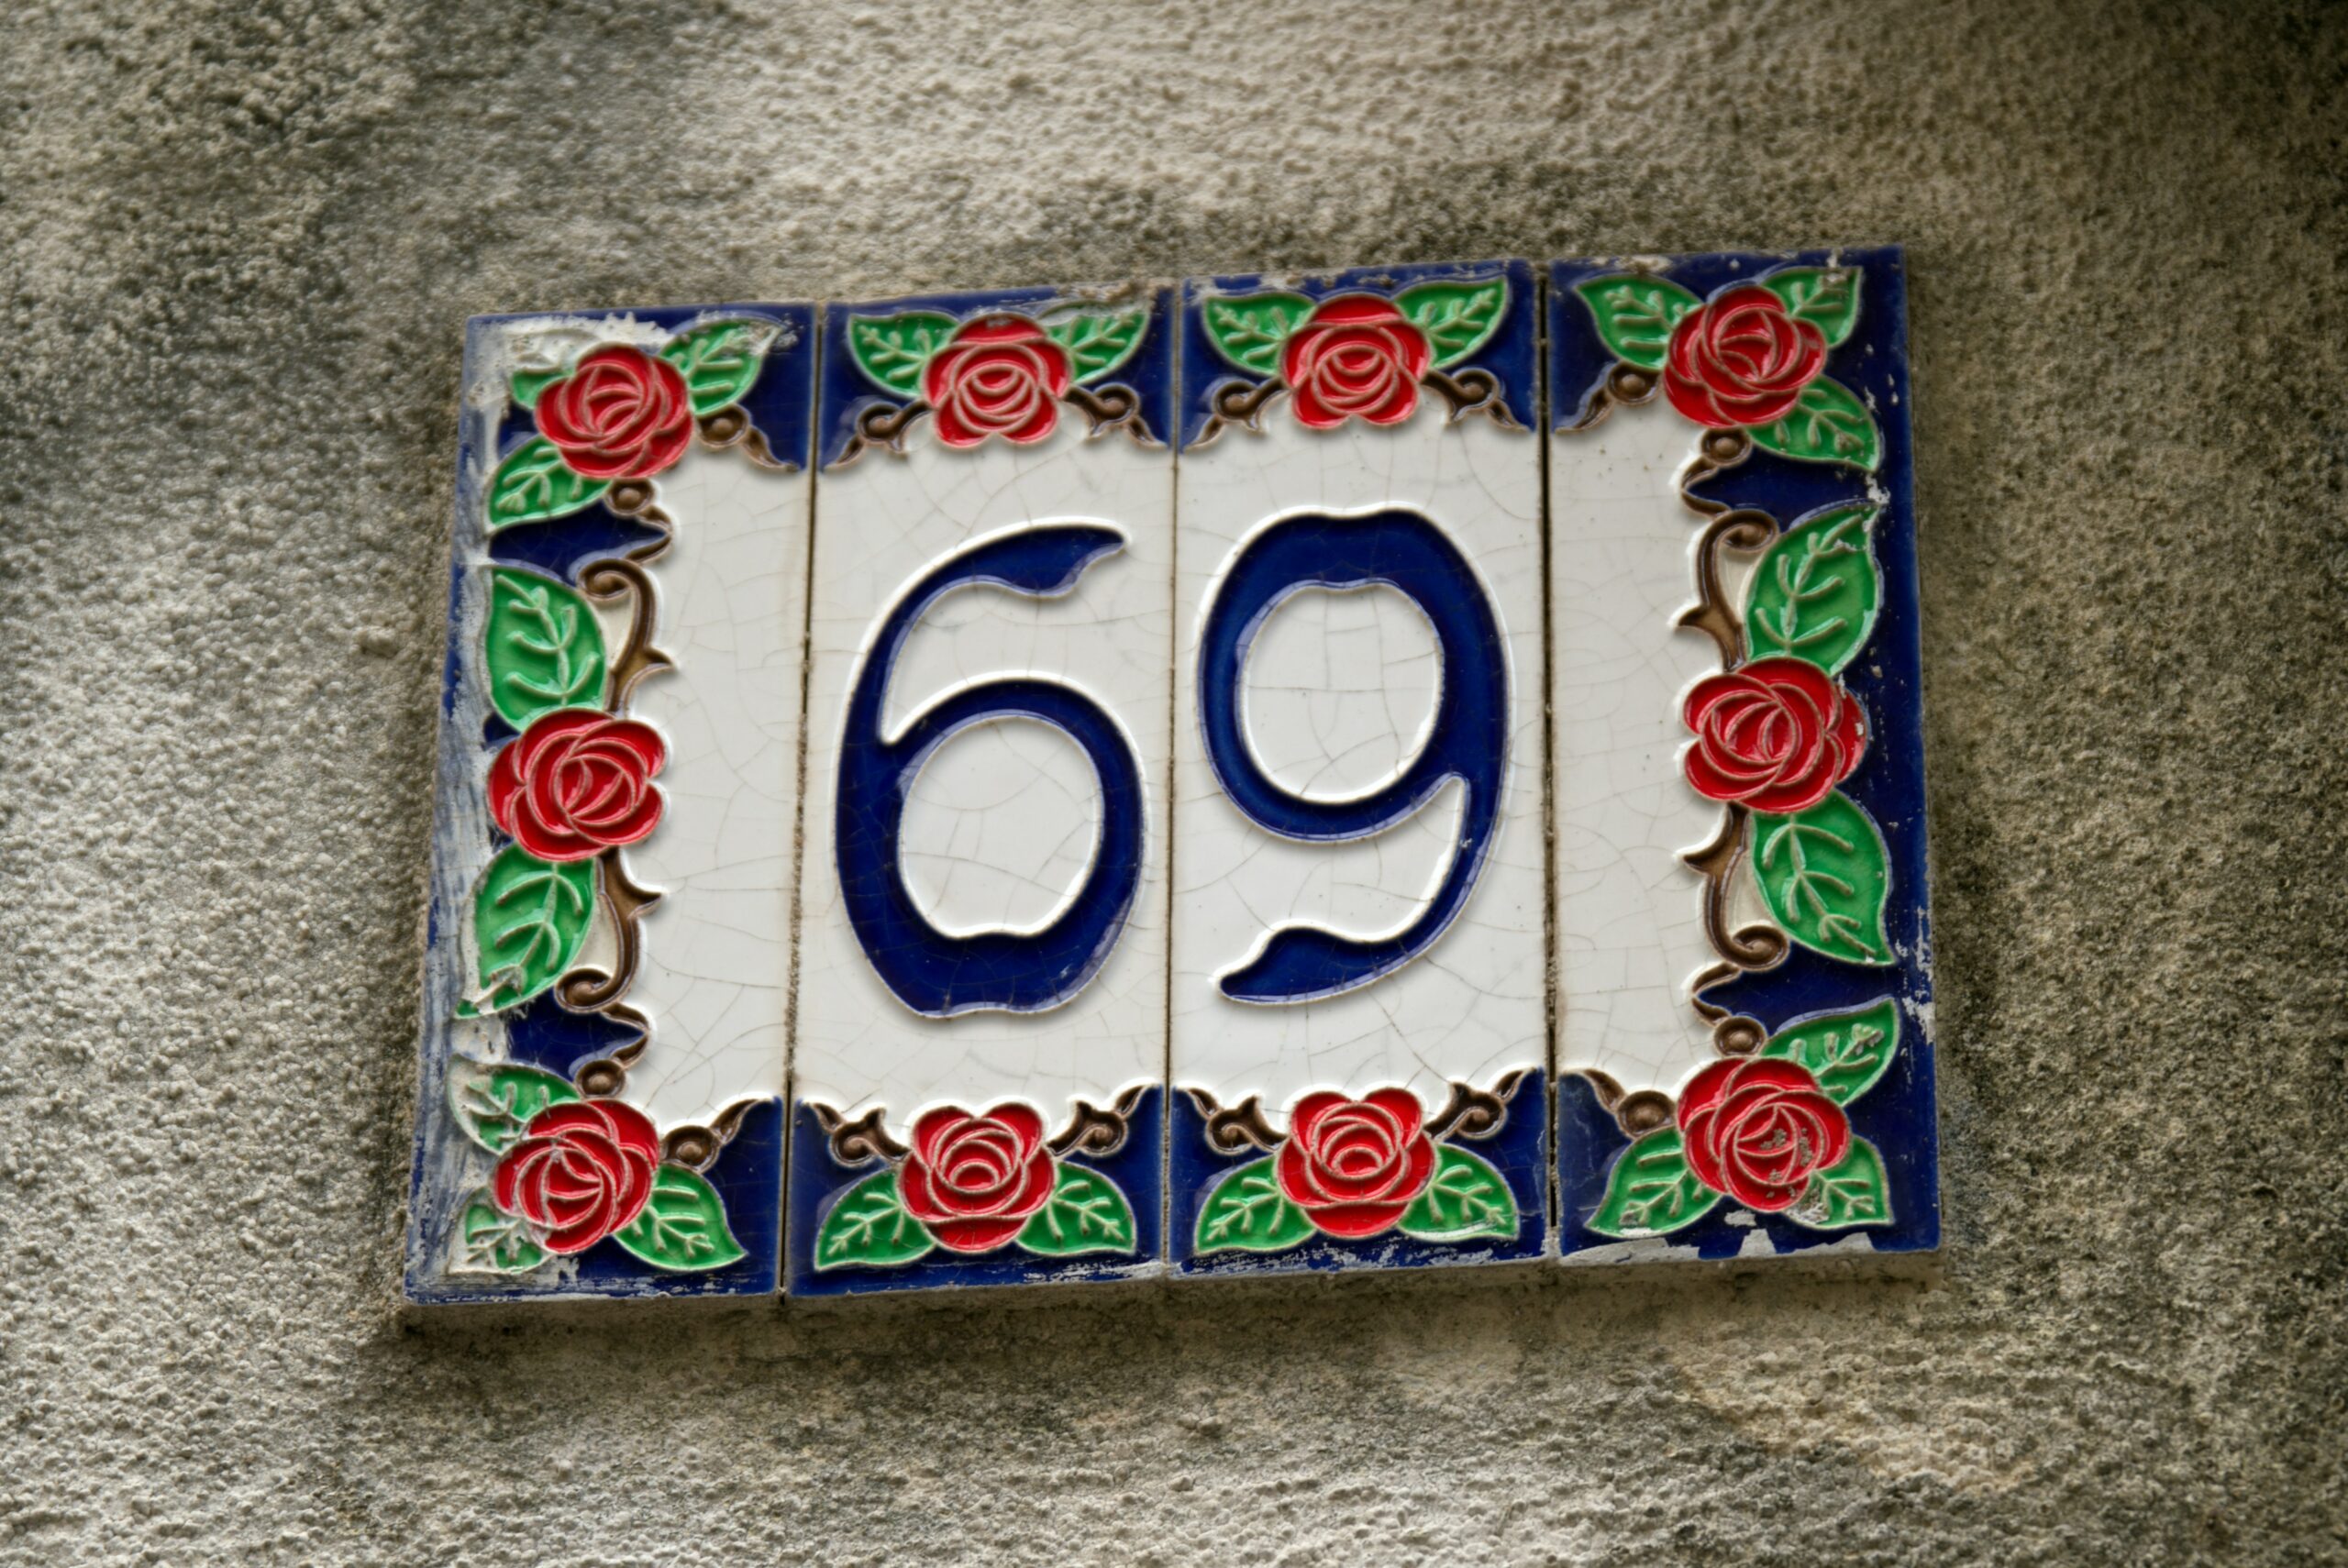 69 street building sign 